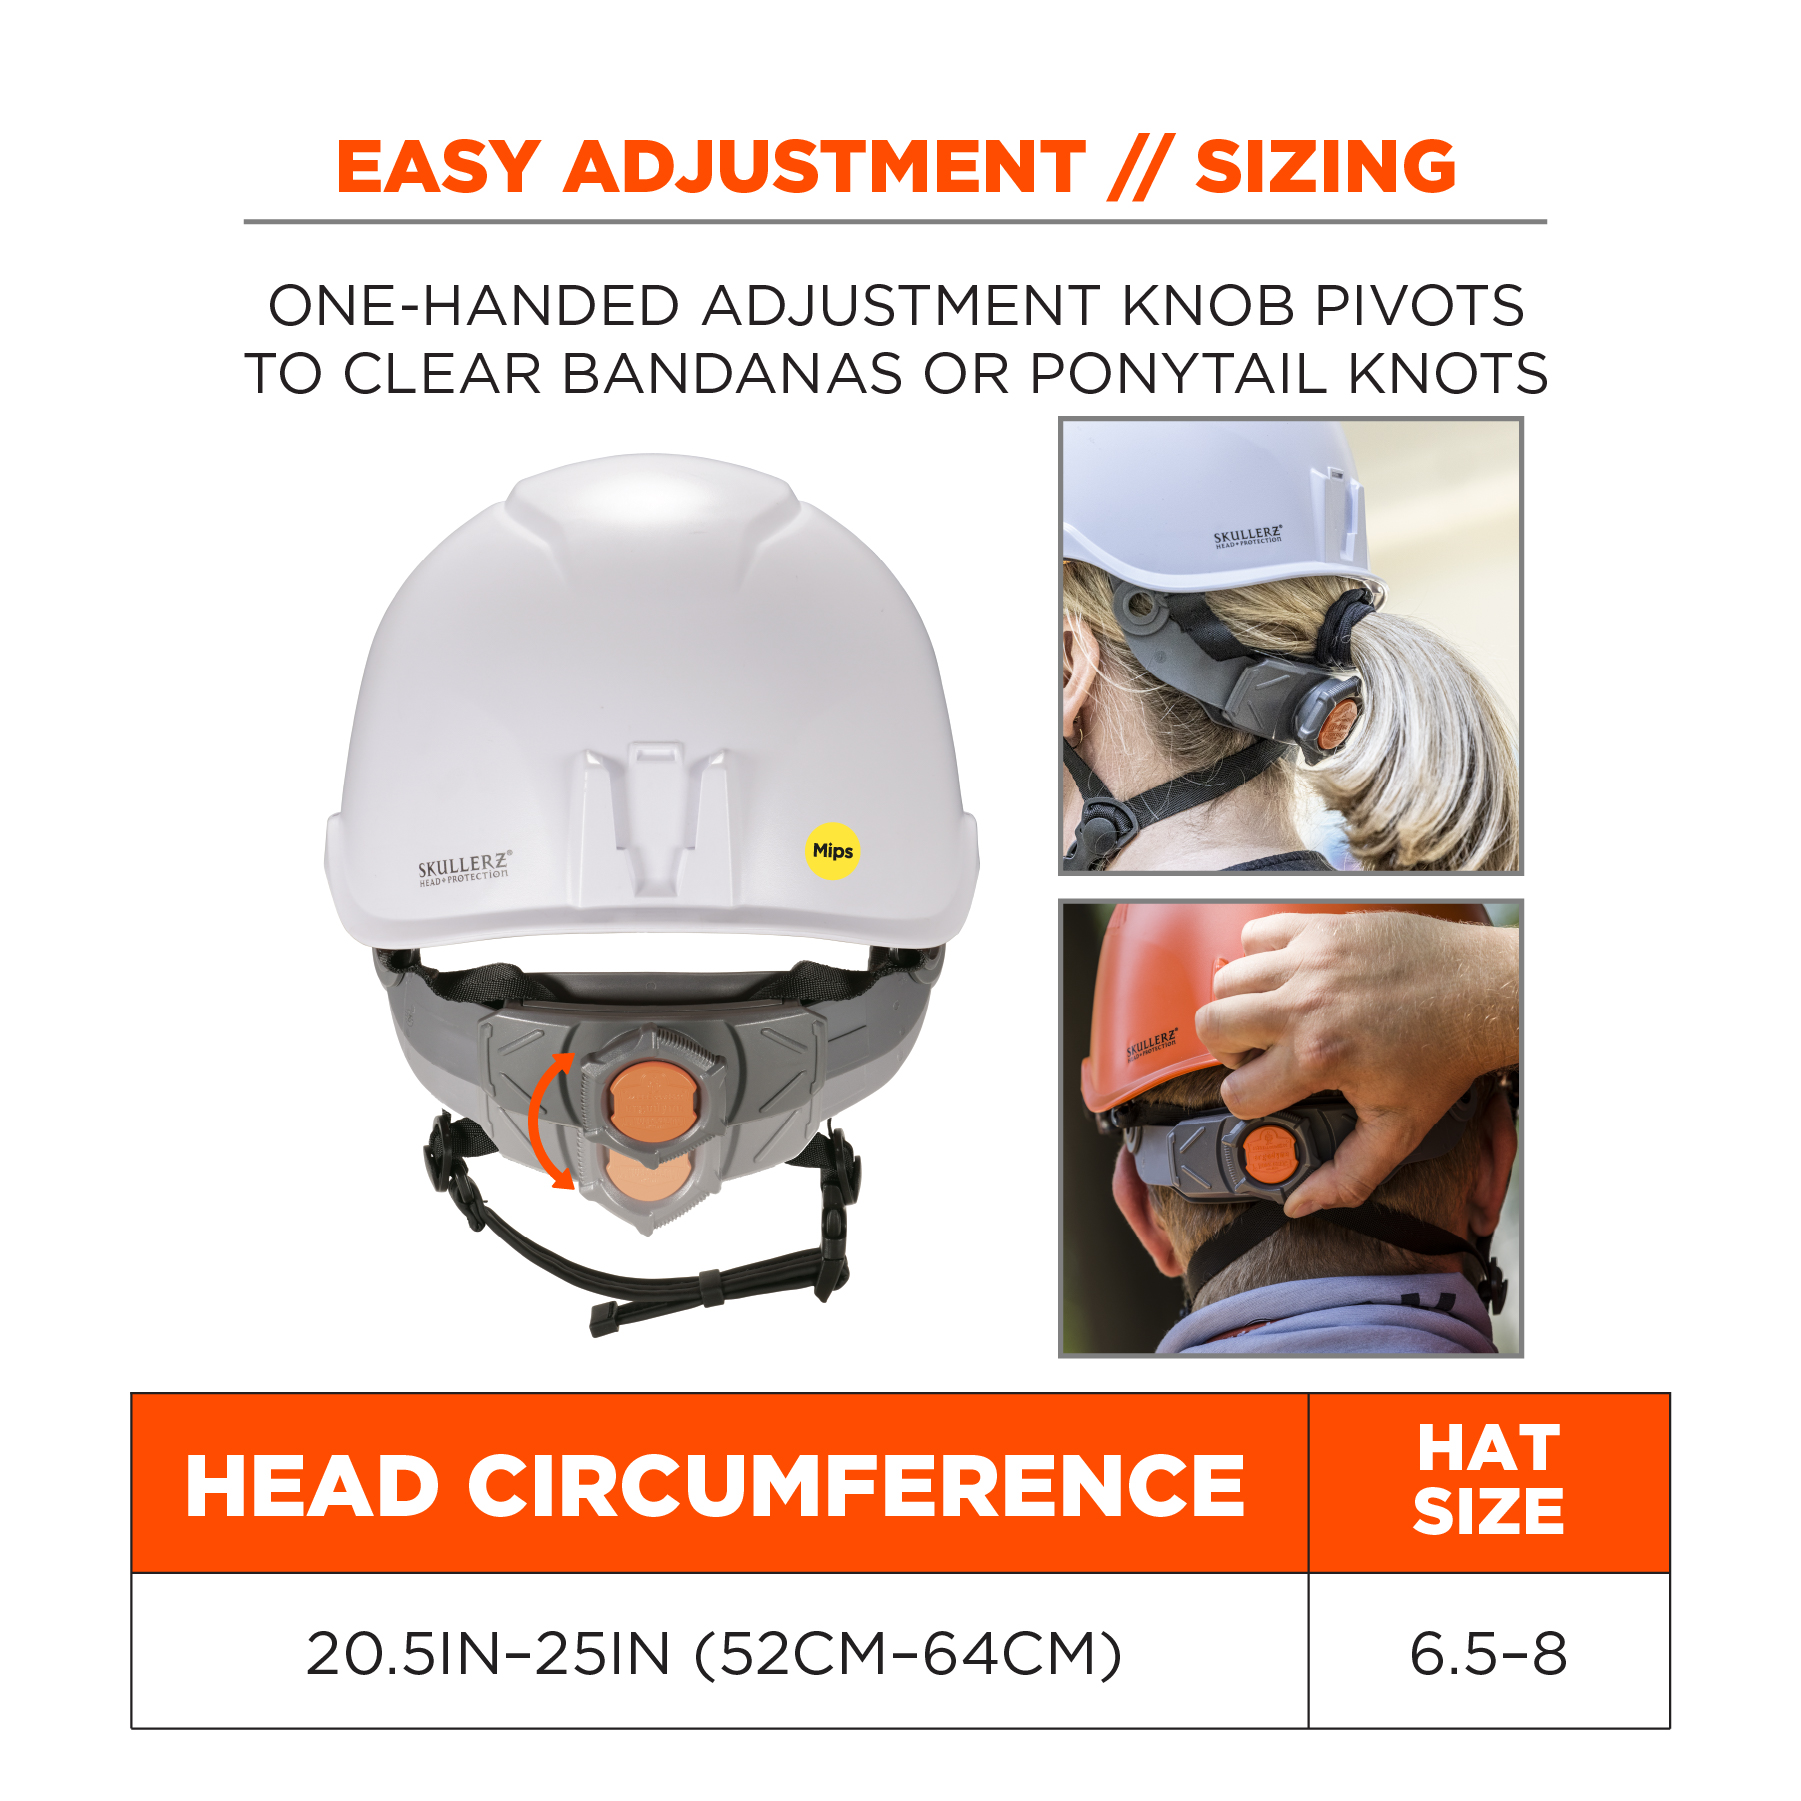 Safety Helmet with MIPS Technology | Ergodyne